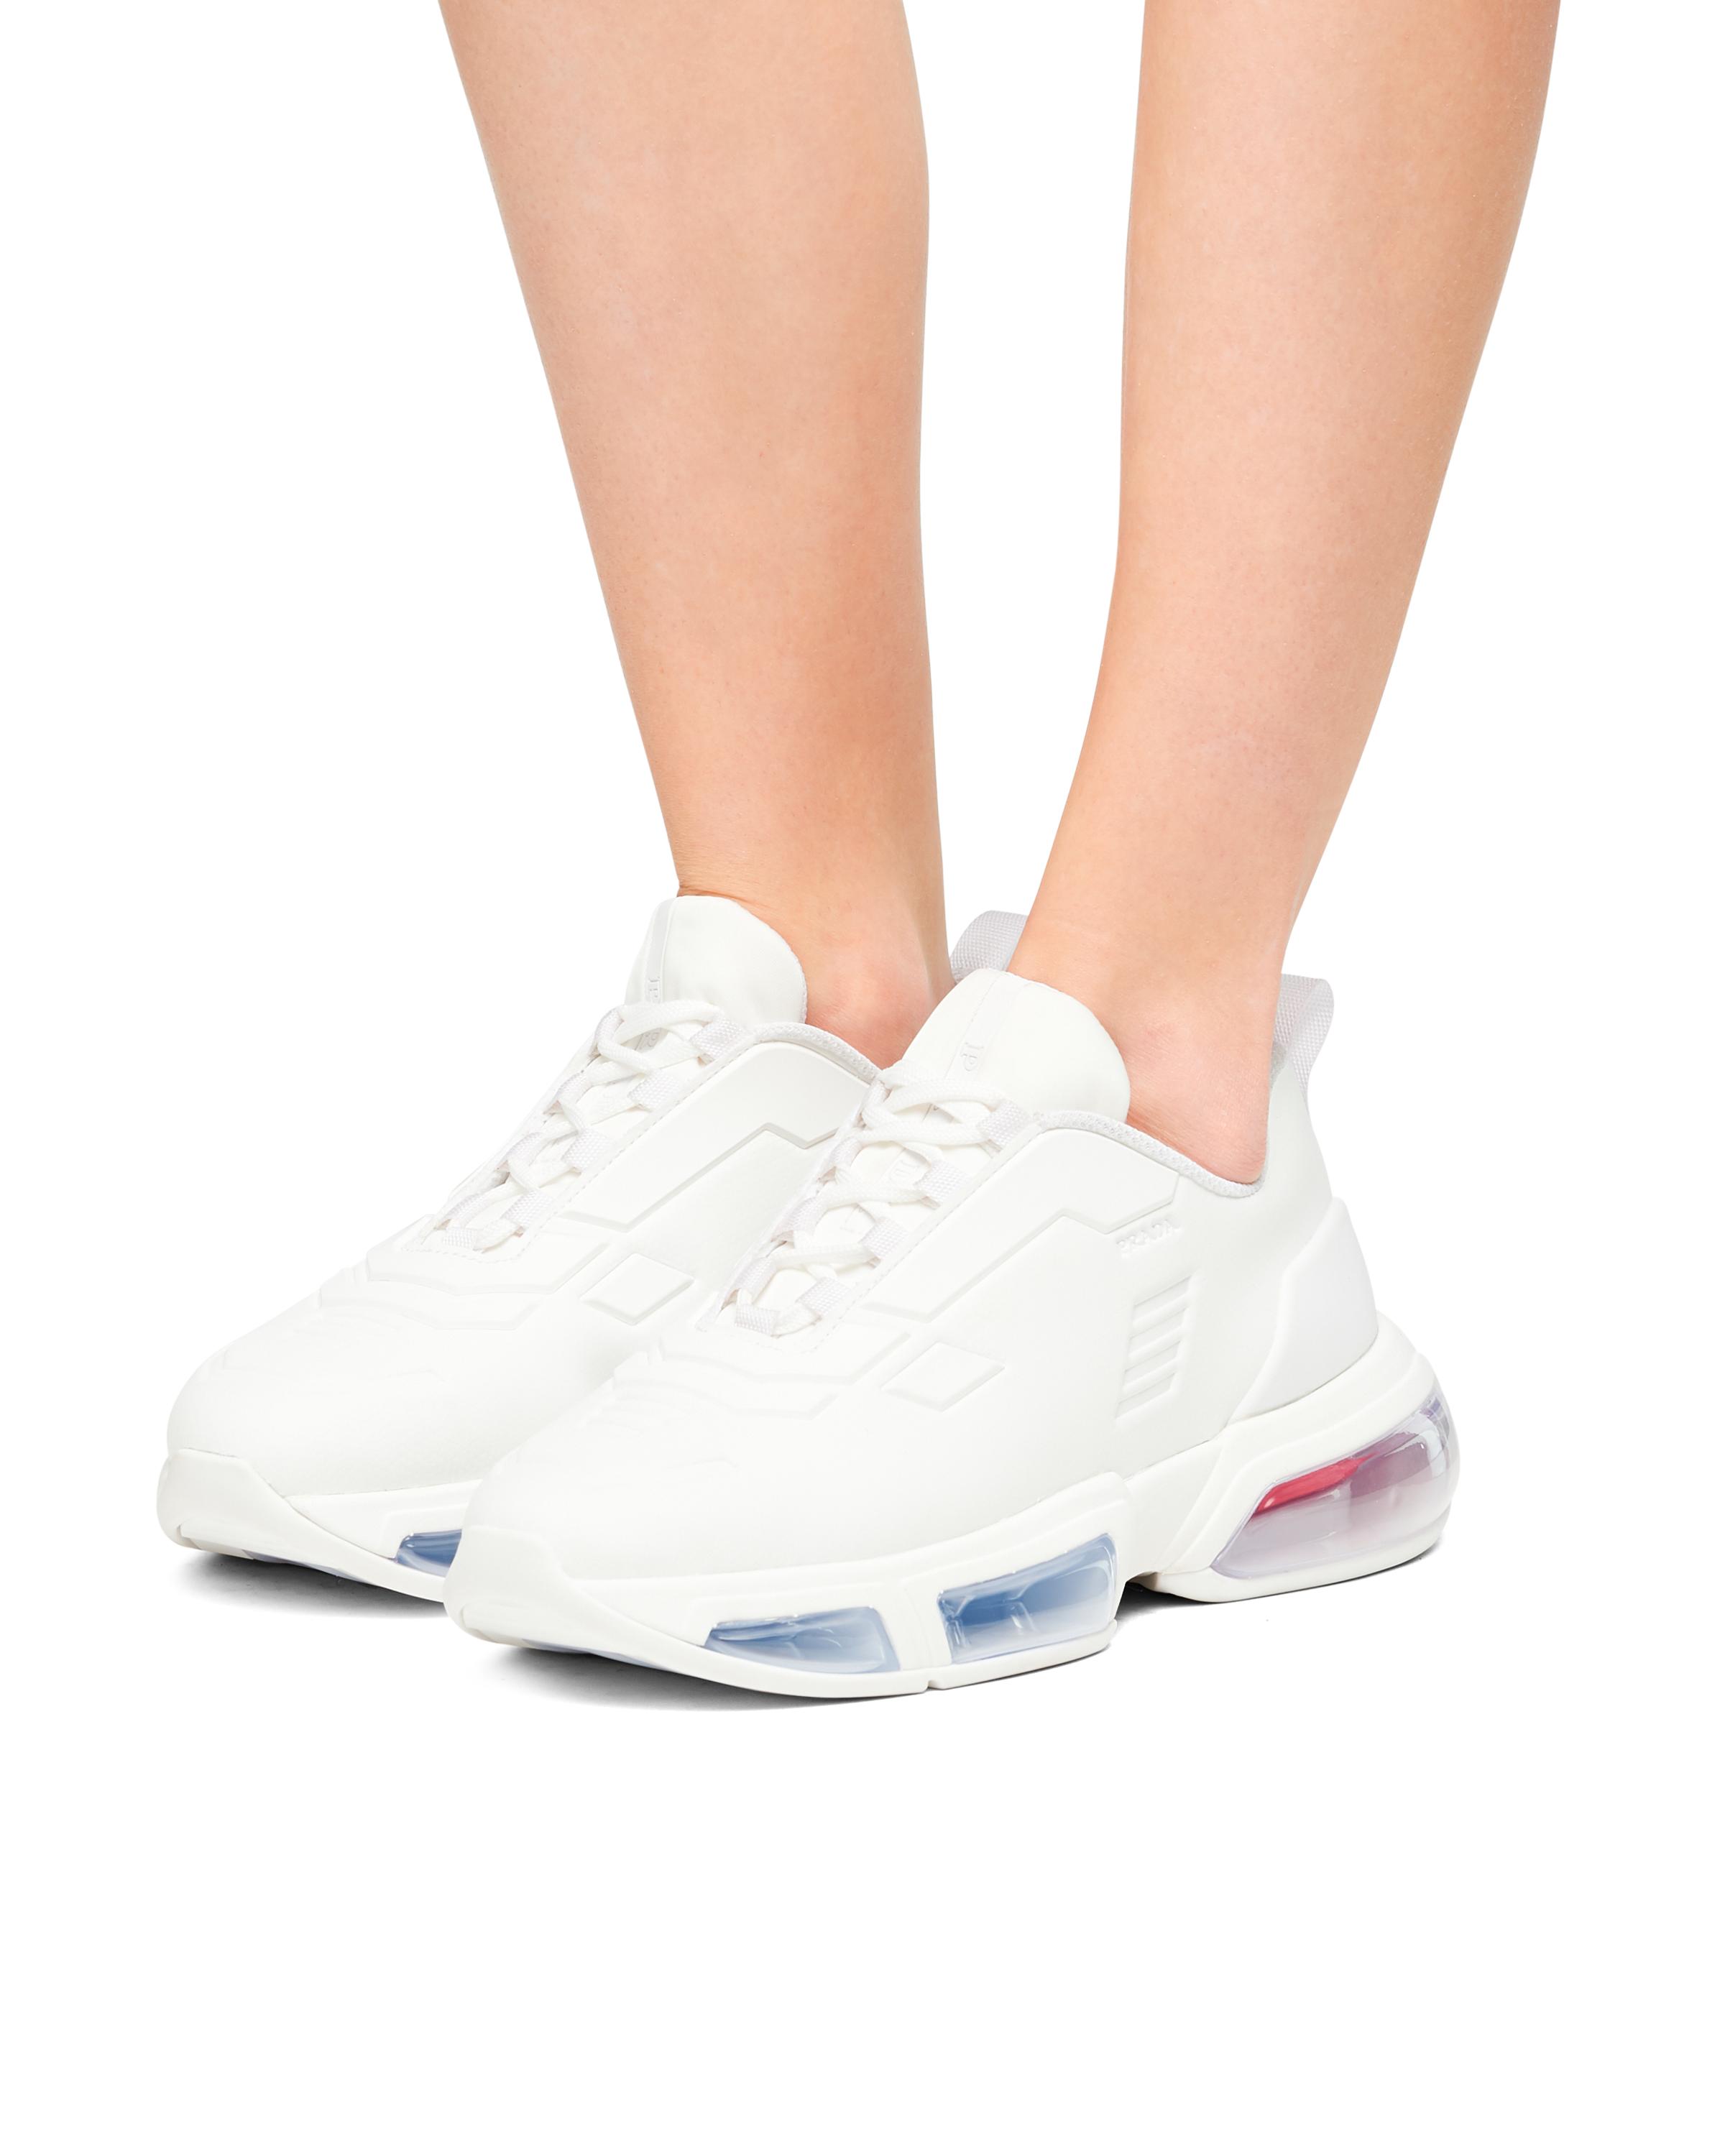 Prada Rubber Linea Rossa Collision 19 Lr Sneakers in White - Save 13% - Lyst